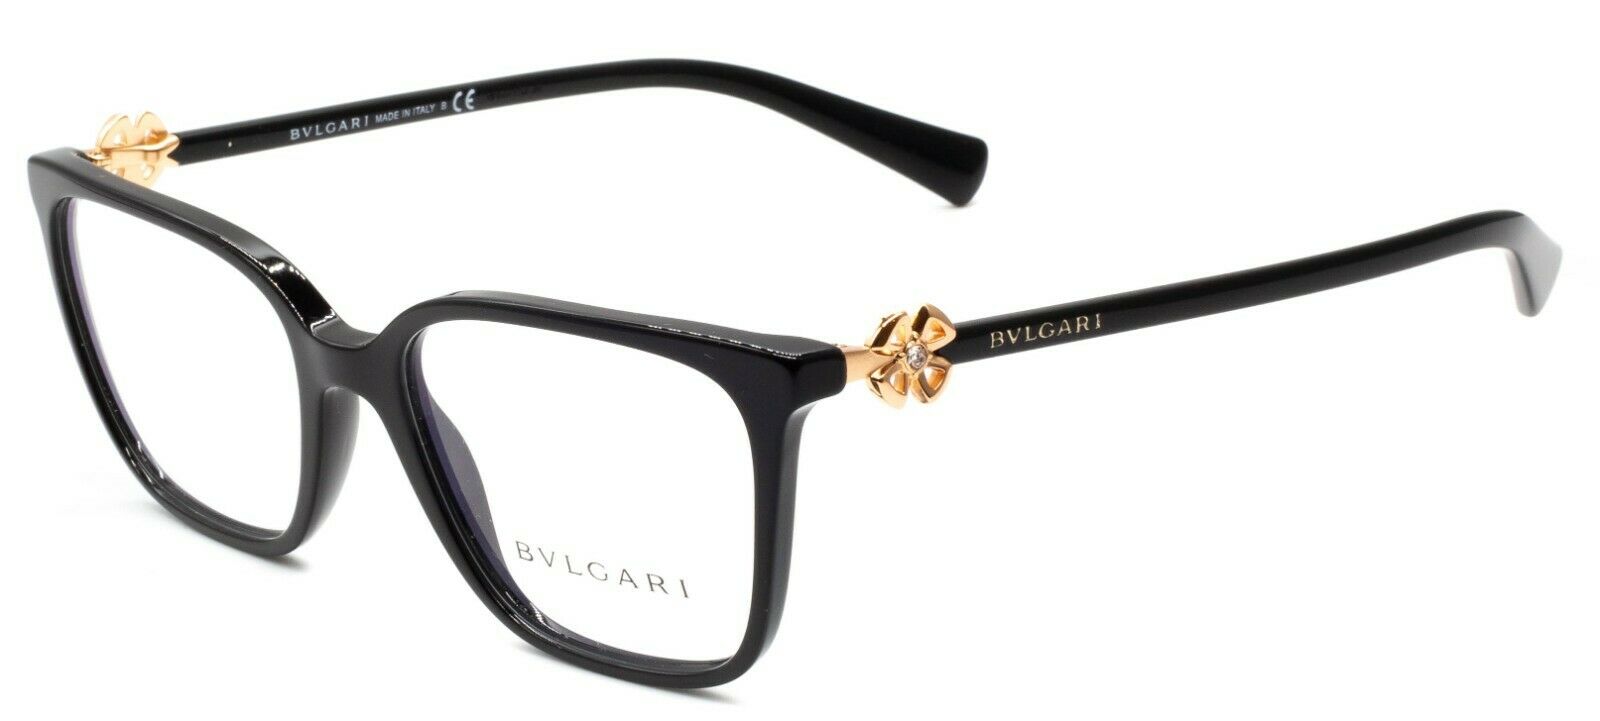 BVLGARI 4197-B 501 51mm Eyewear Glasses RX Optical Glasses Eyeglasses - New